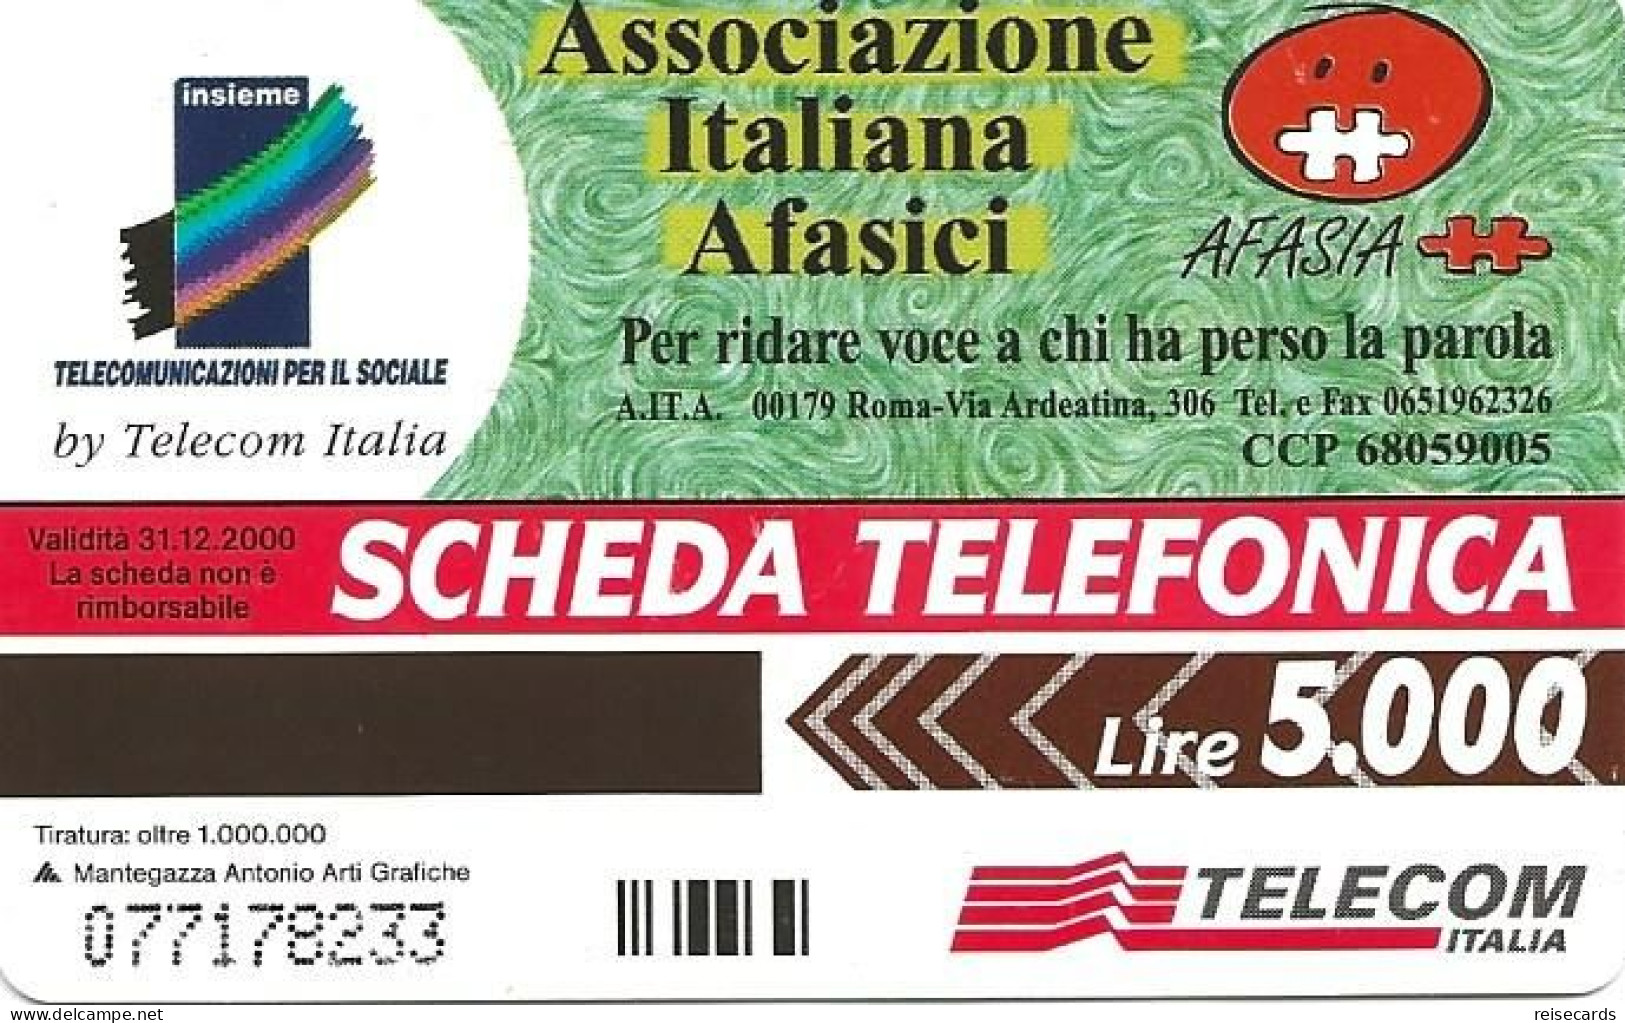 Italy: Telecom Italia - Associazione Italiana Afasici - Public Advertising